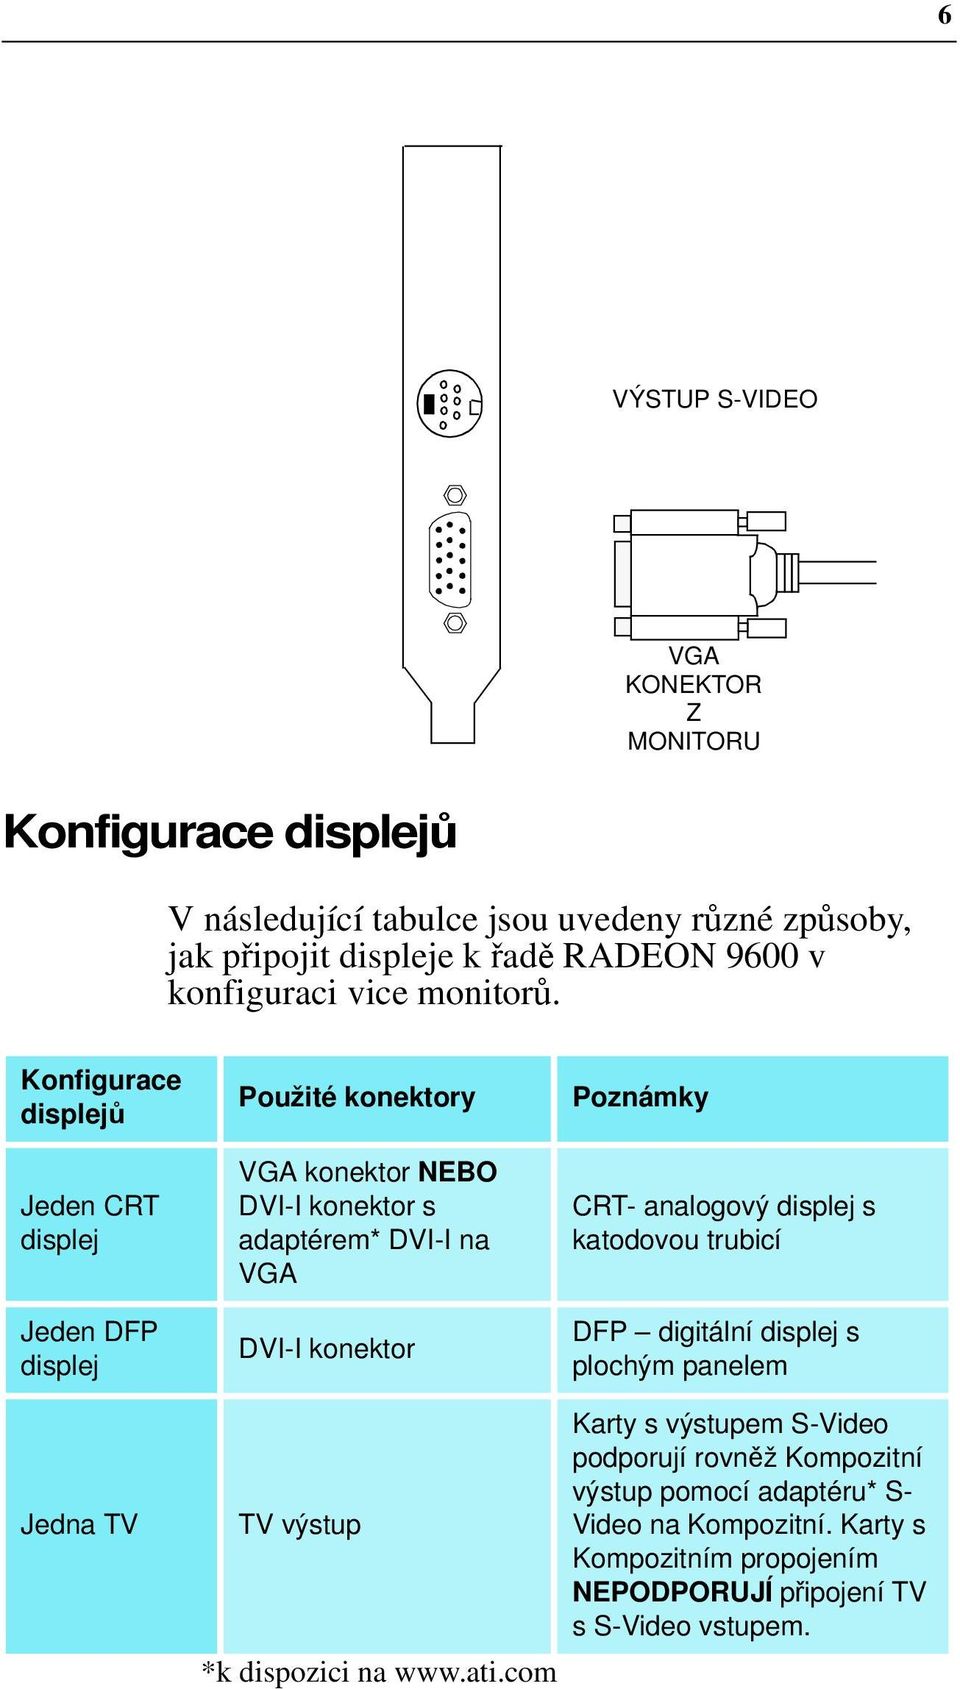 Konfigurace displejů Jeden CRT displej Jeden DFP displej Použité konektory VGA konektor NEBO DVI-I konektor s adaptérem* DVI-I na VGA DVI-I konektor Poznámky